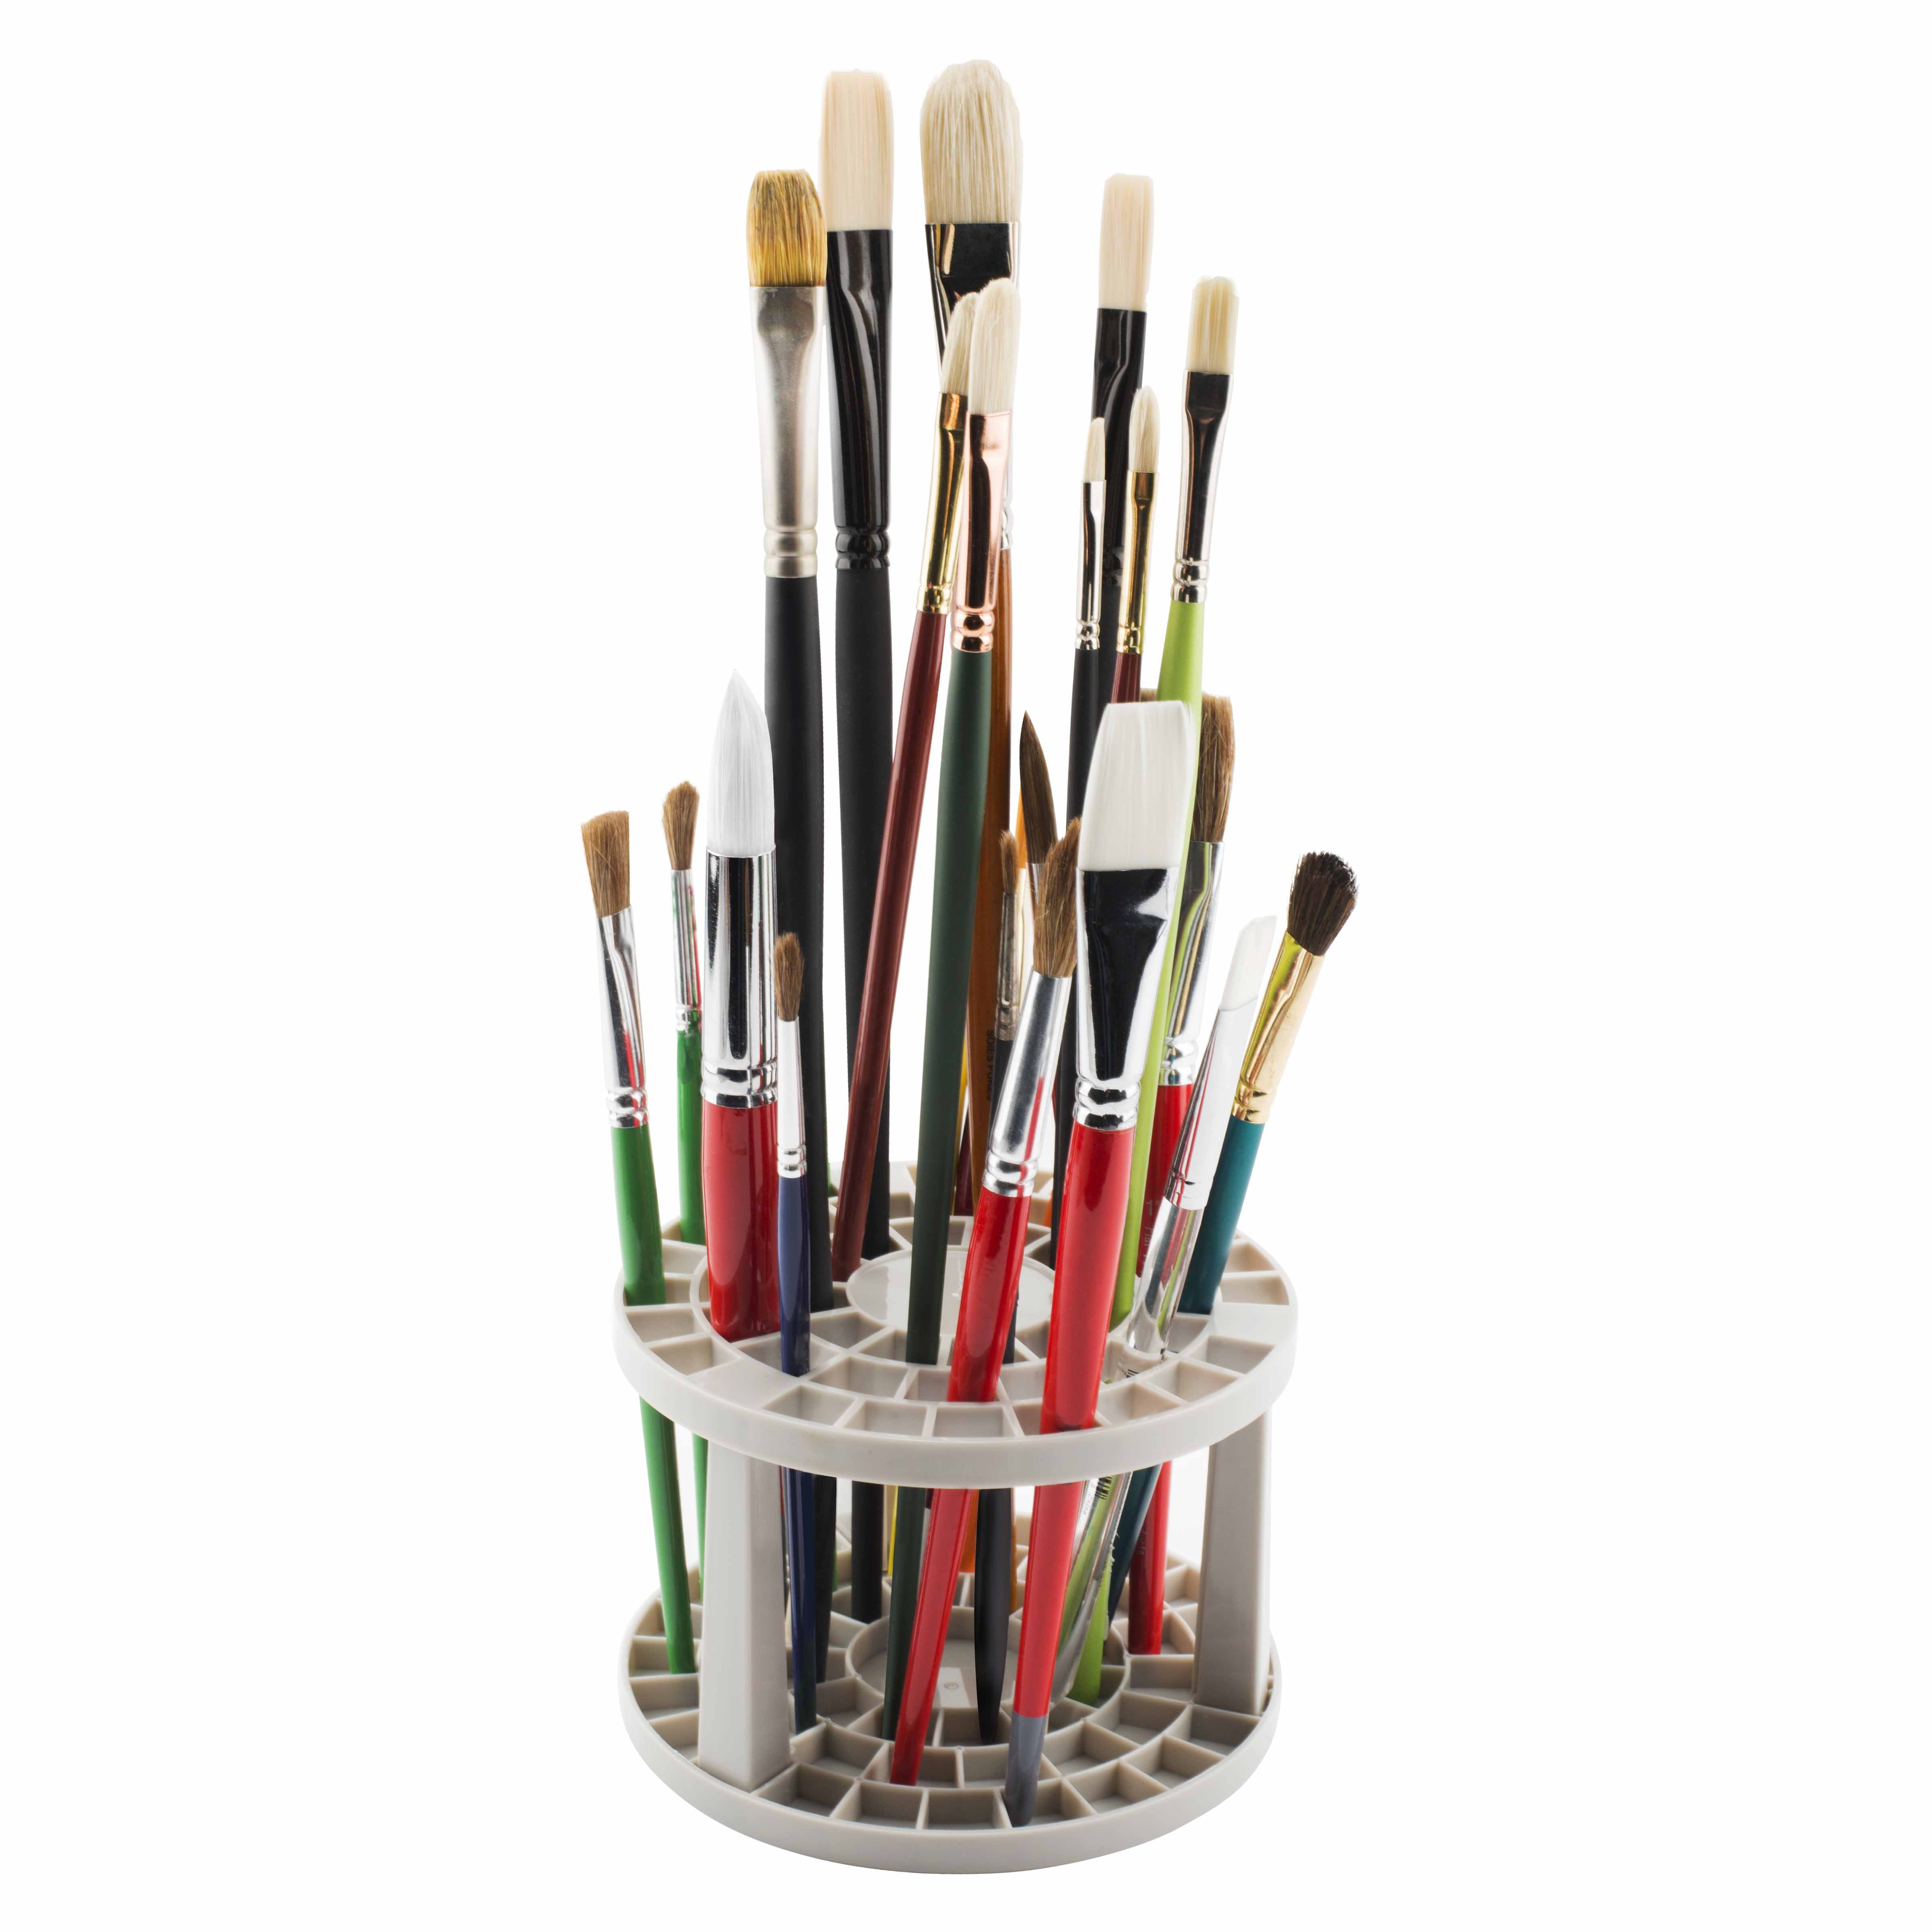 Modera Art Supplies: brush holder/bag/plastic paint palette